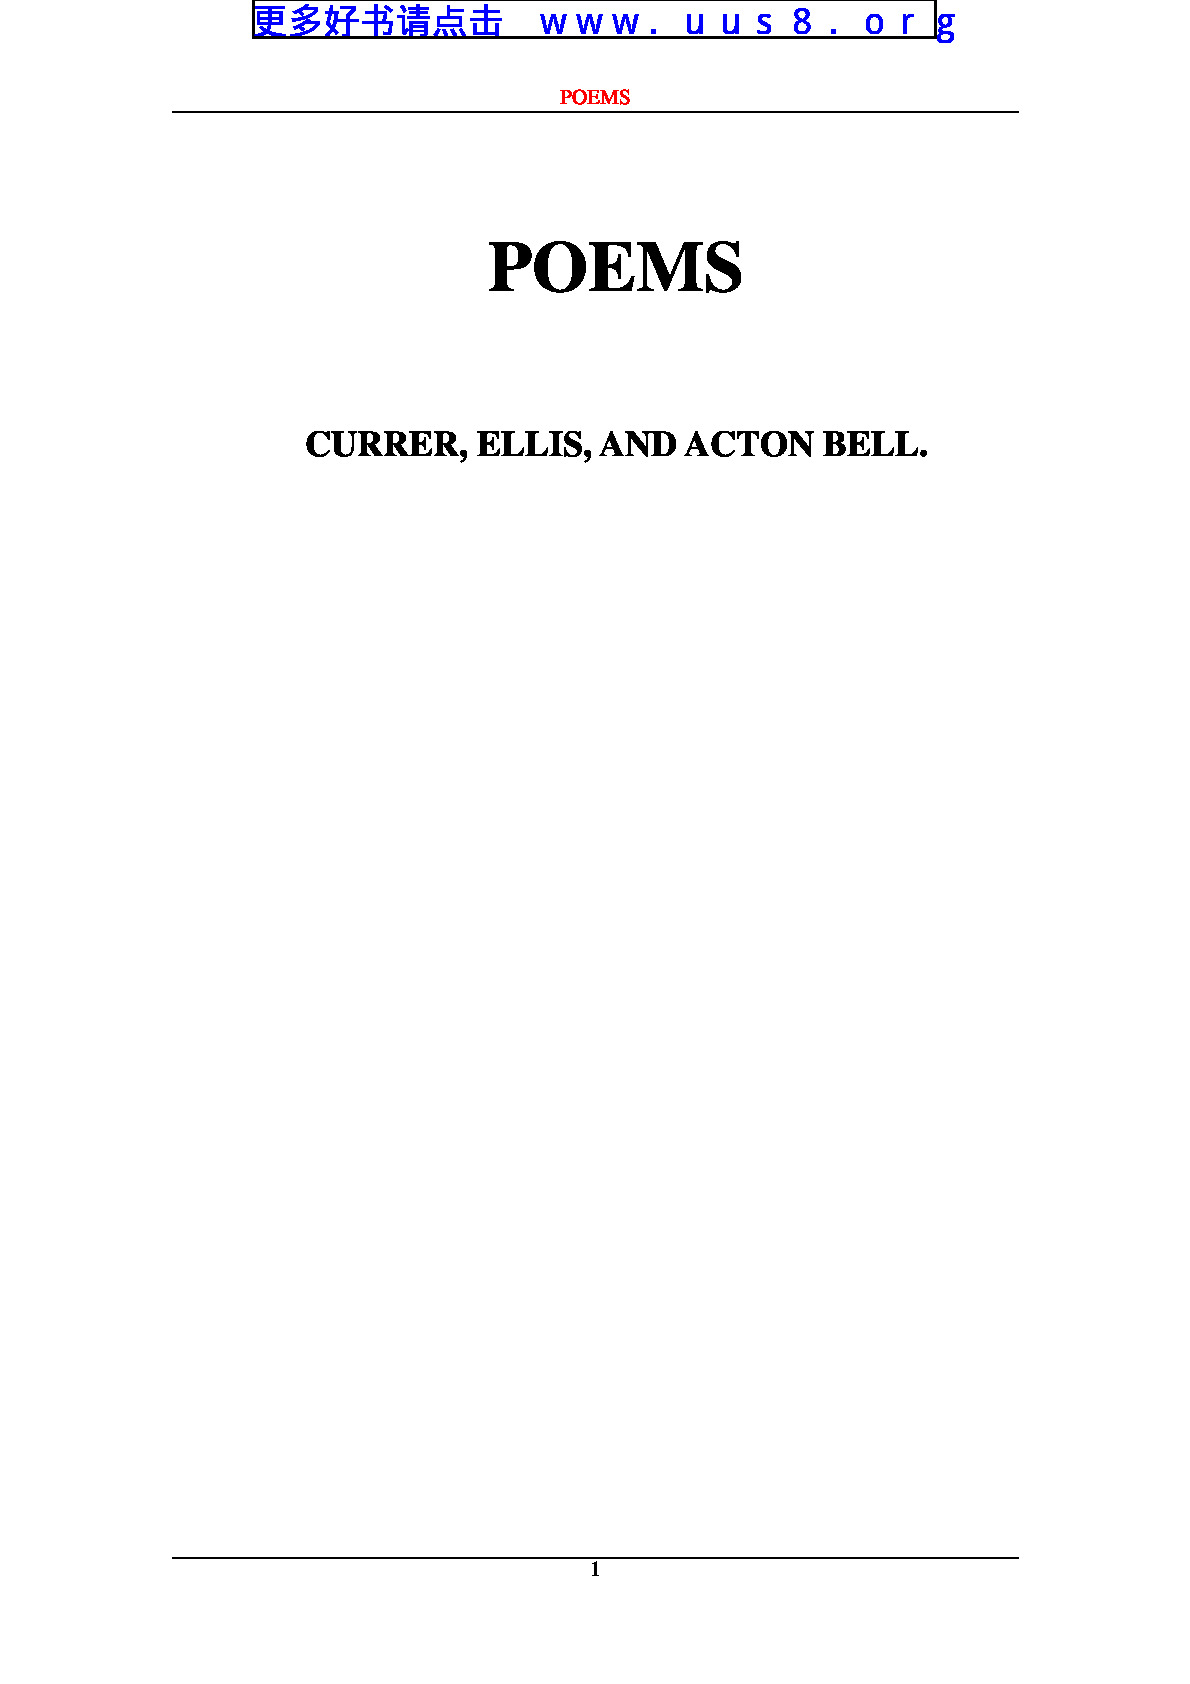 Poems(勃朗特姆姐妹诗集) – 副本